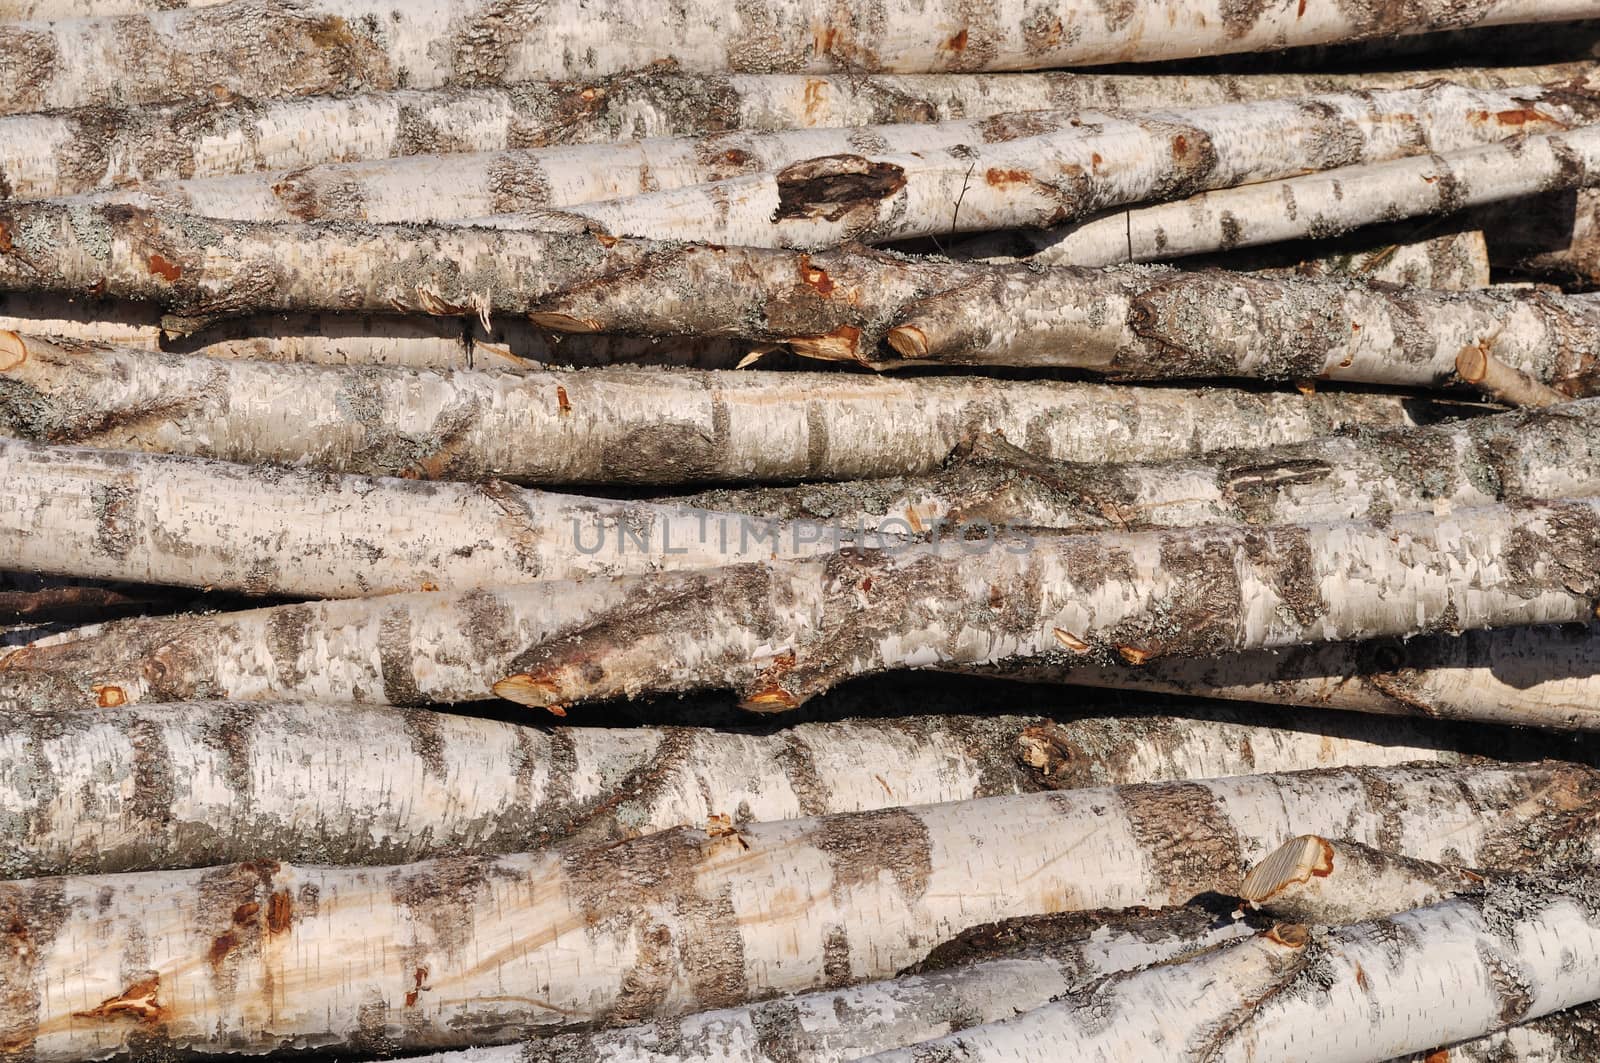 Stack of birch logs by wander